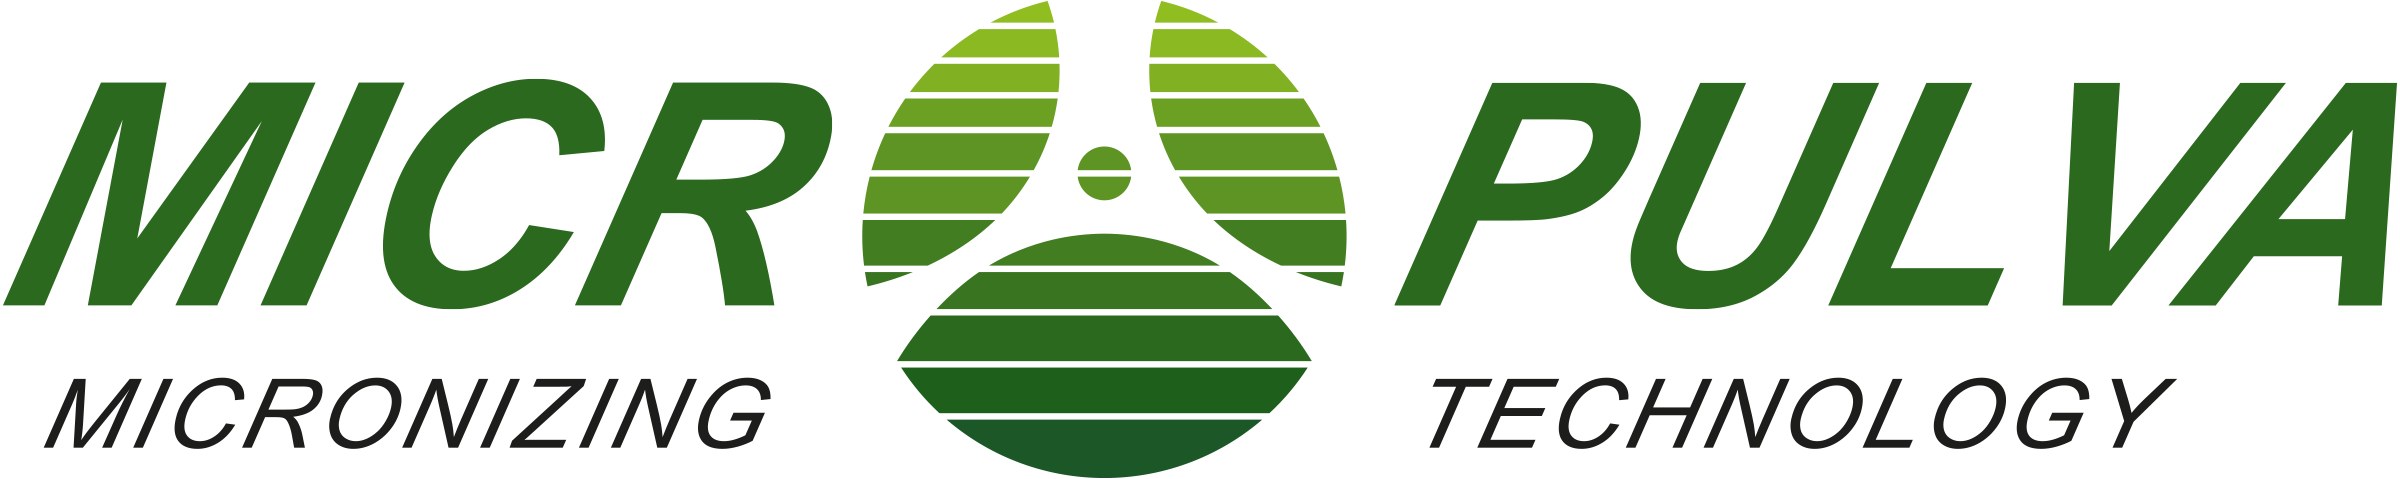 Micropulvan logo